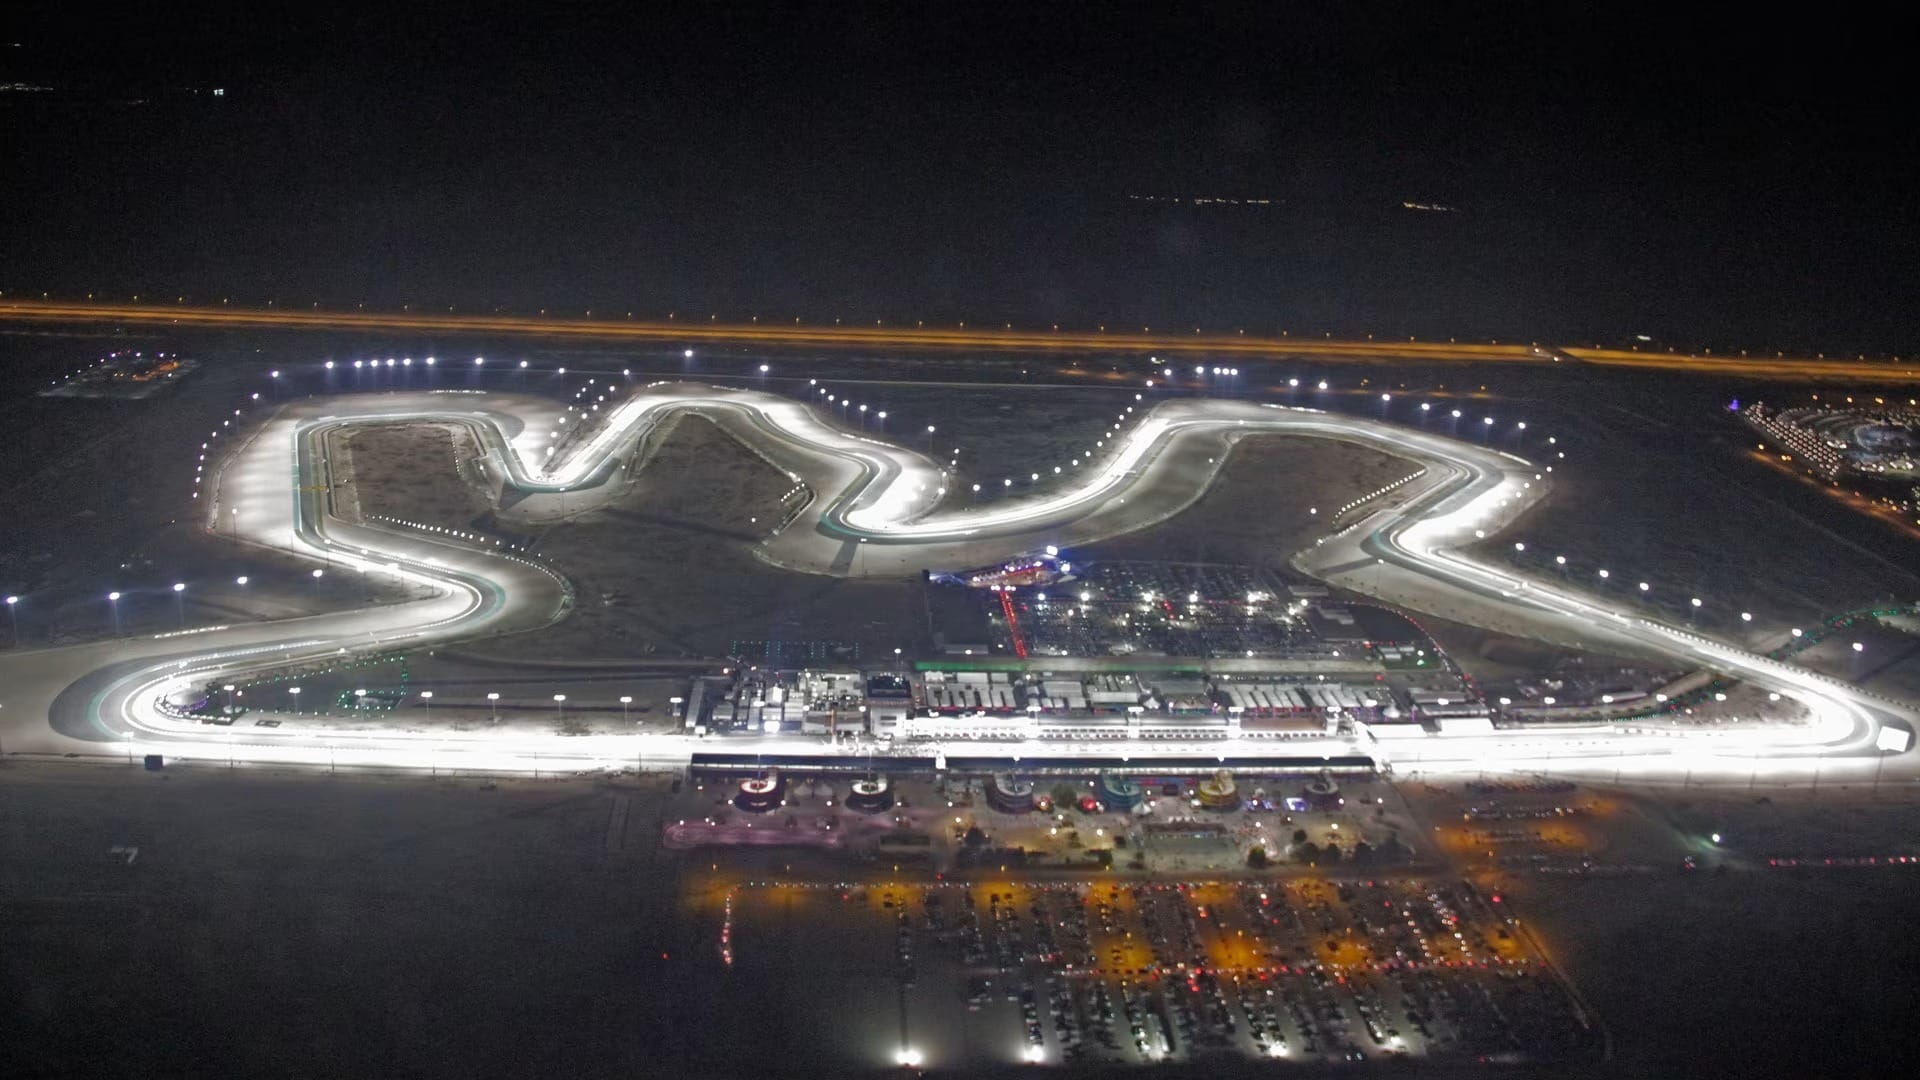 F1 Katar GP 2023: Saat kaçta, nasıl canlı izlenir?